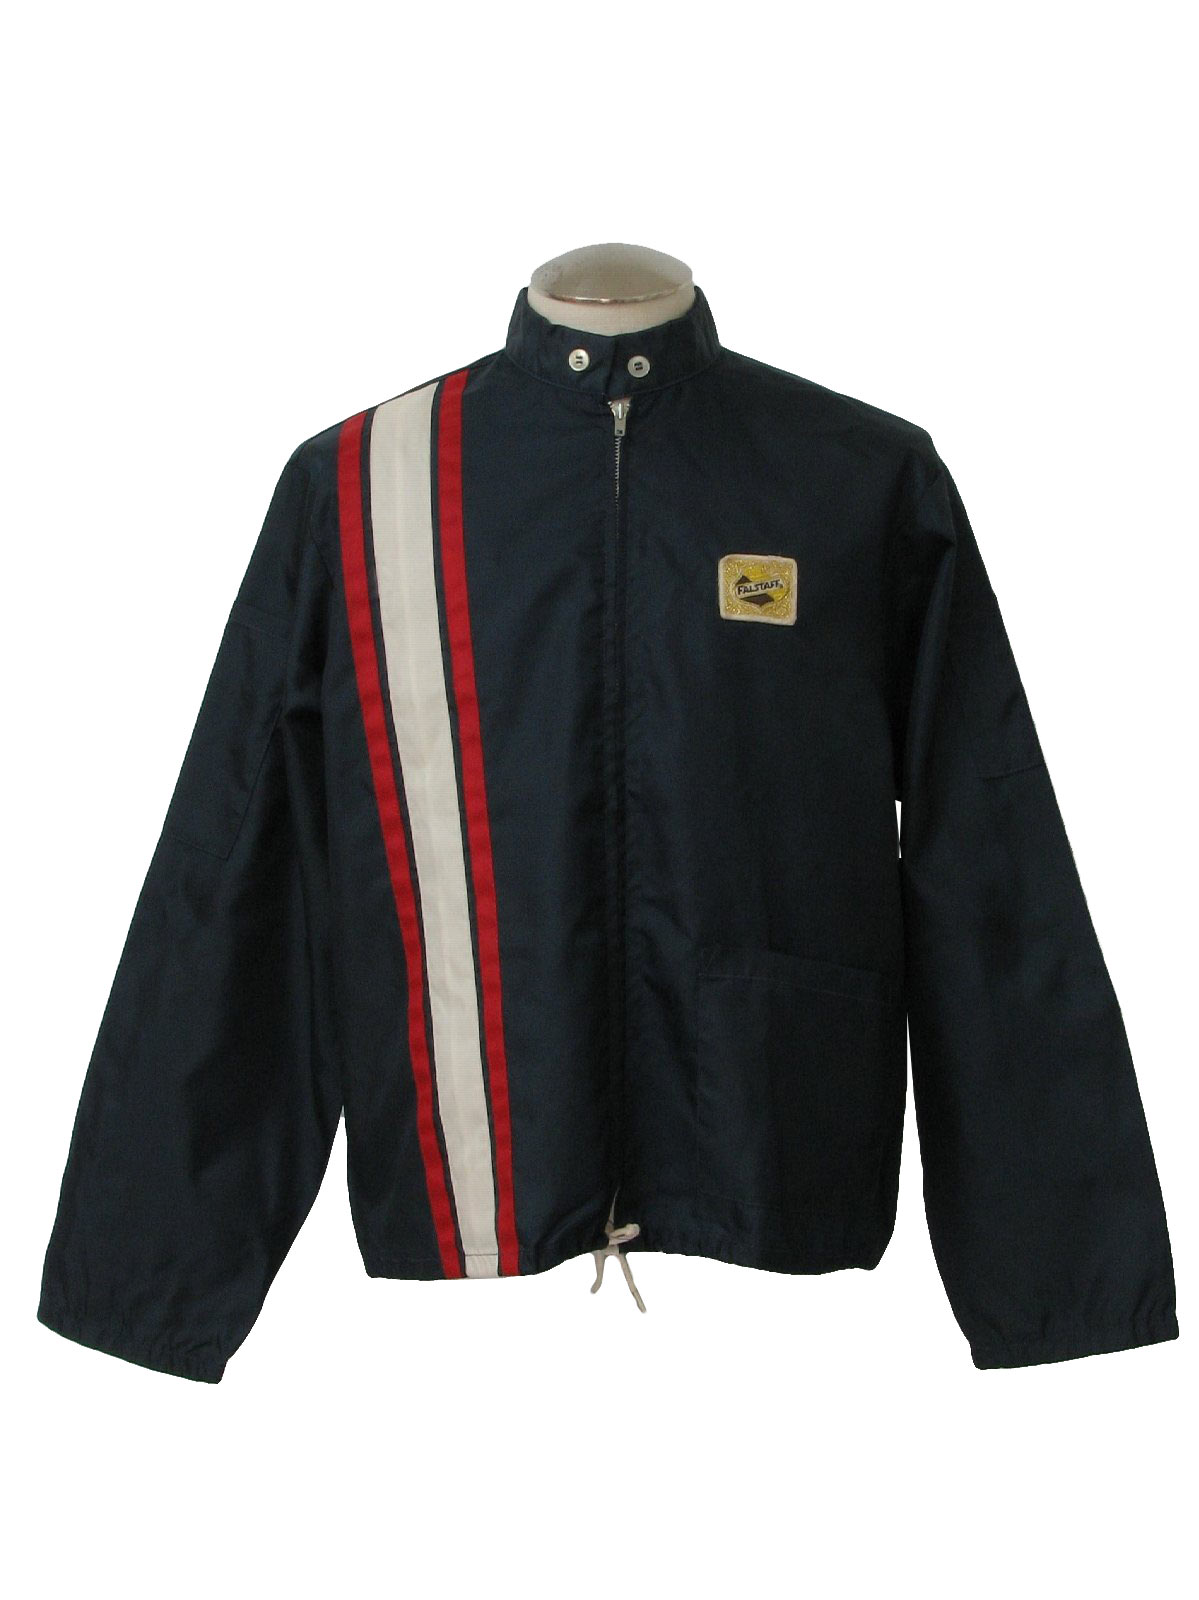 Vintage Pla Jac by Dunbrooke 60's Jacket: late 60s -Pla Jac by ...